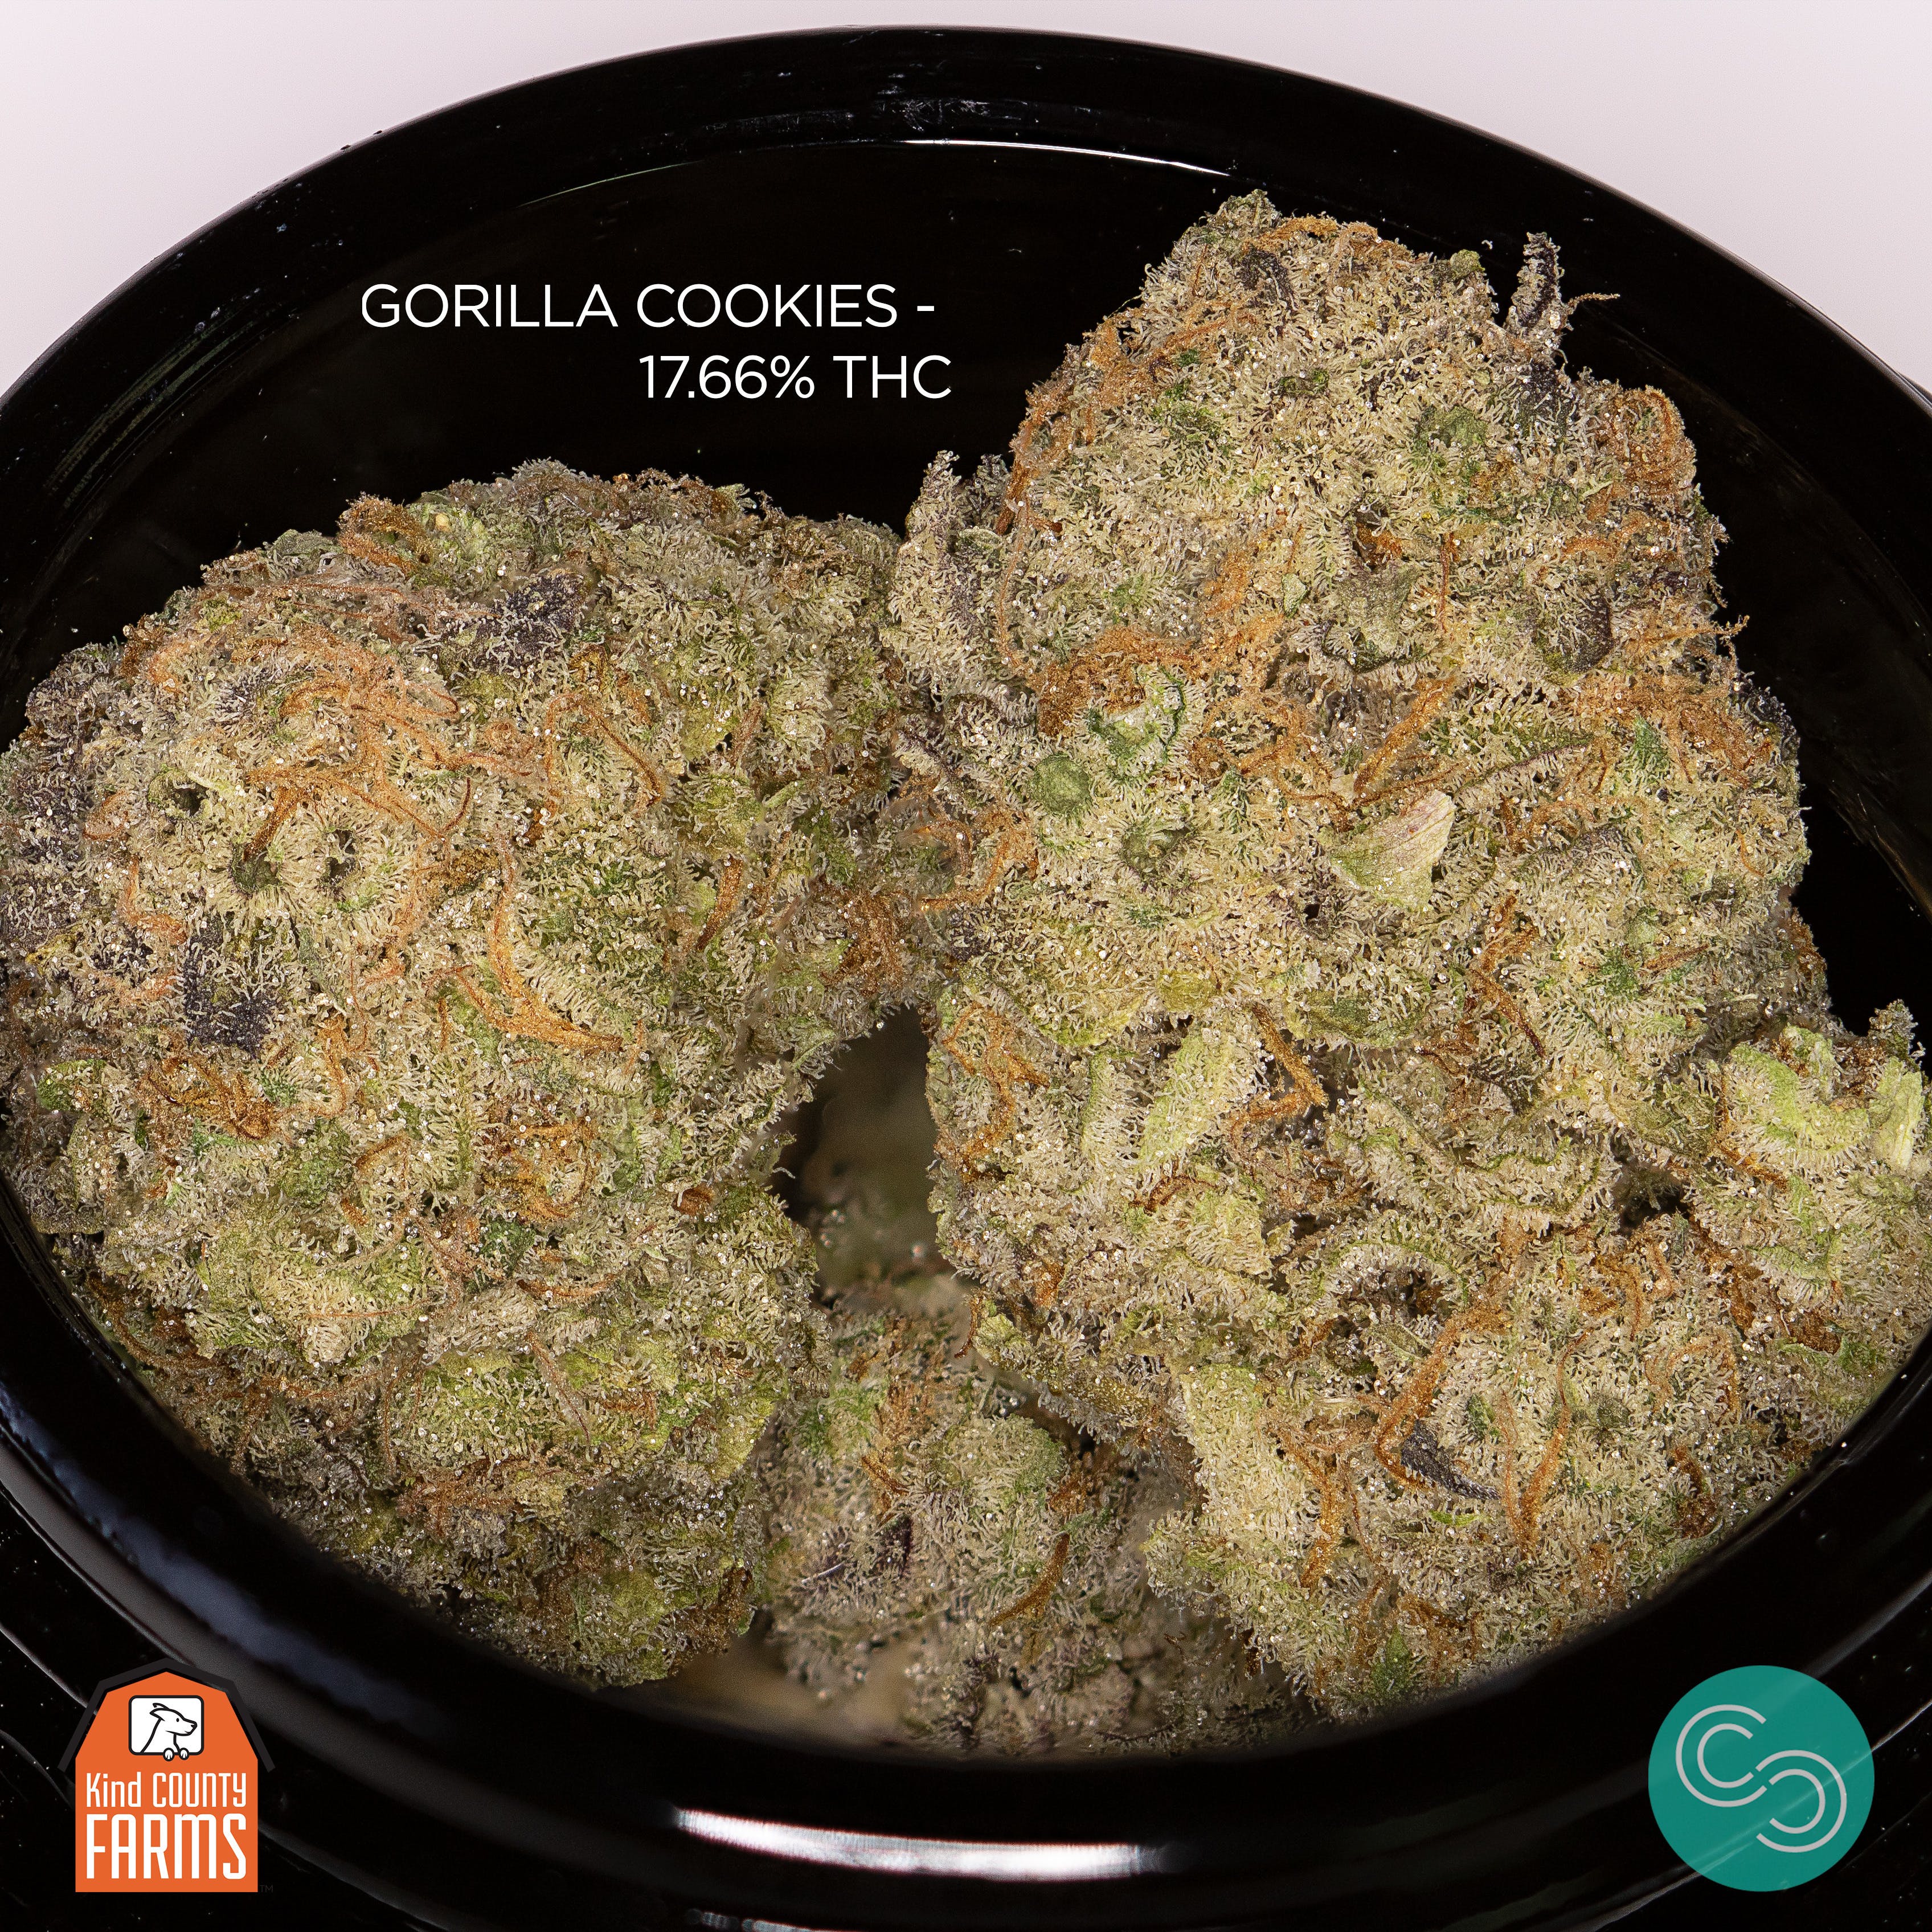 Kind County - Gorilla Cookies - 17.66%THC